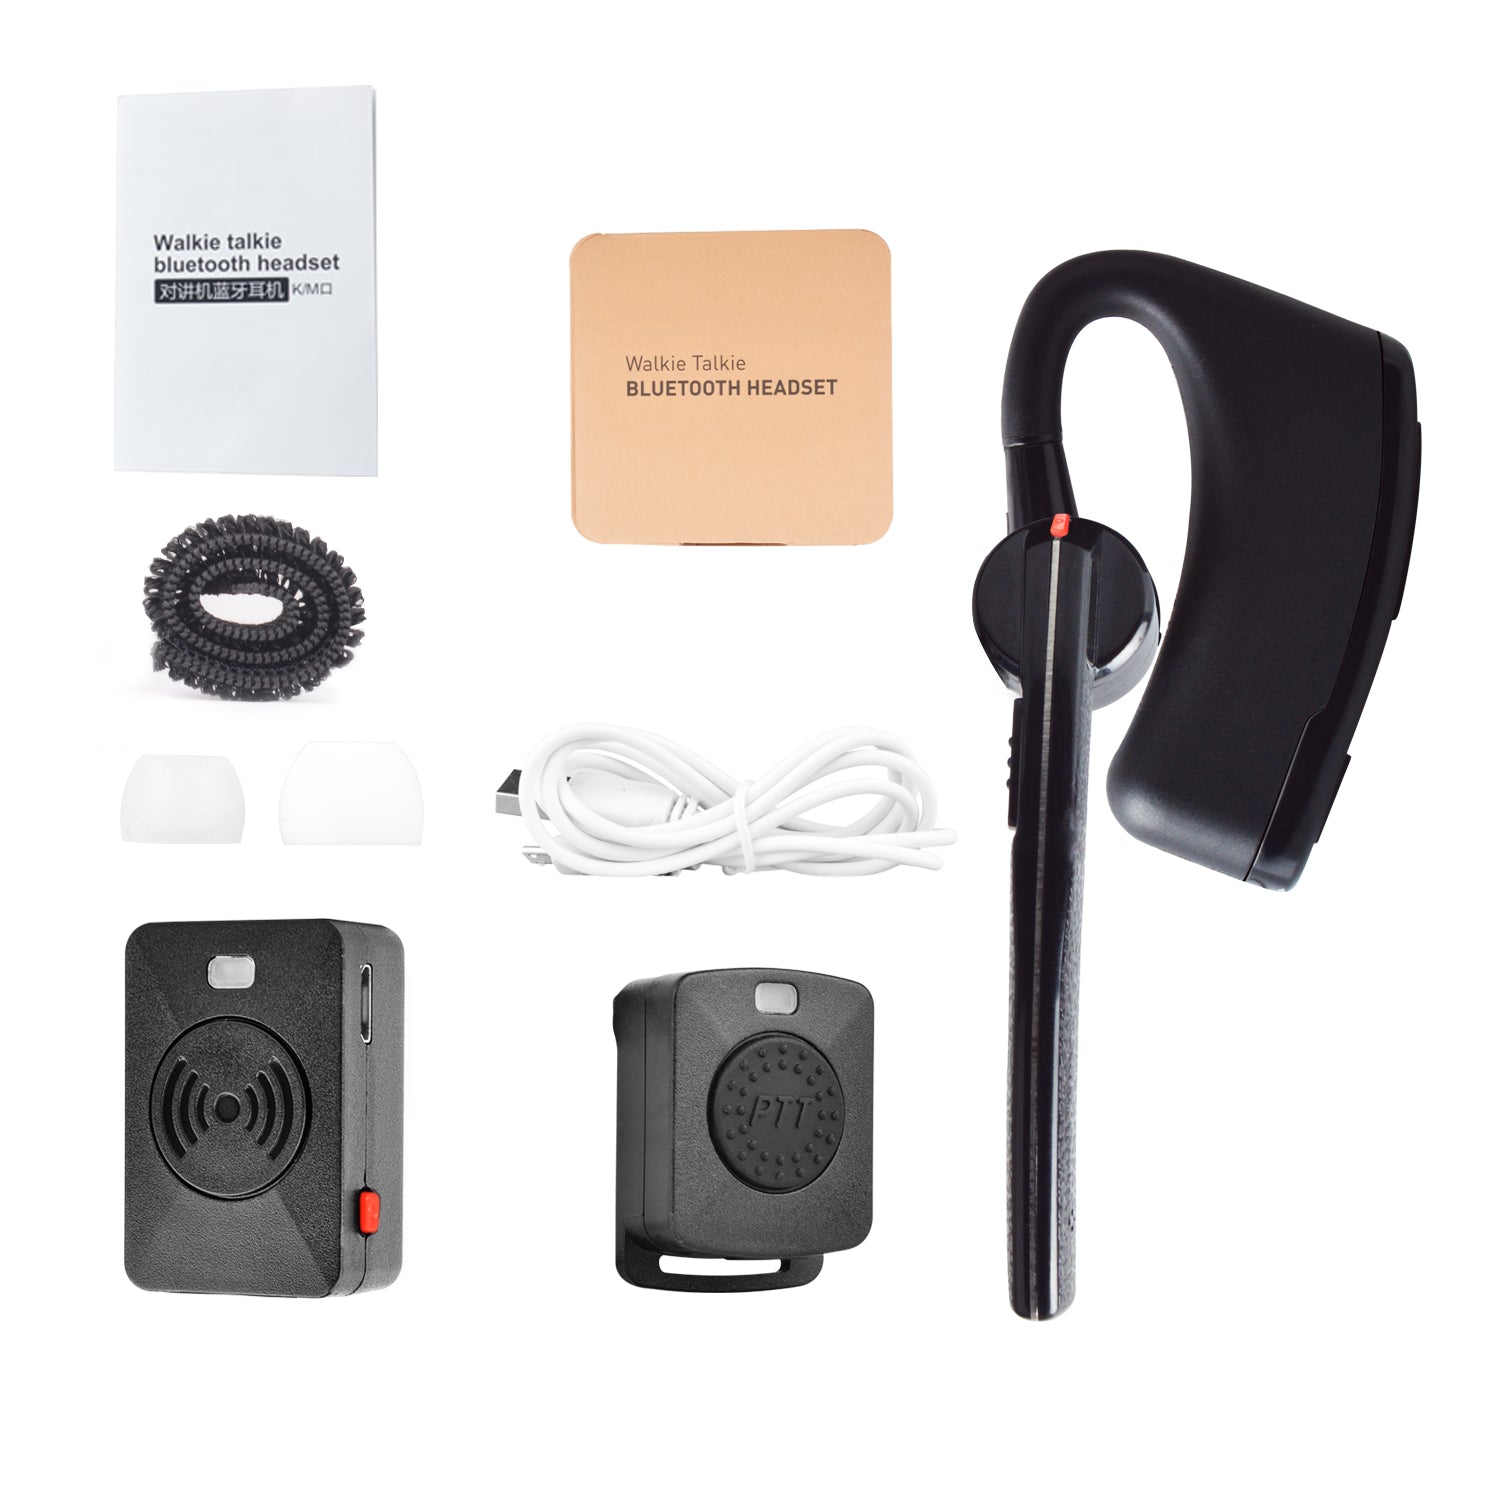 HB4 Bluetooth-Compatible Walkie Talkie with Wireless Earpiece - Herda Radio